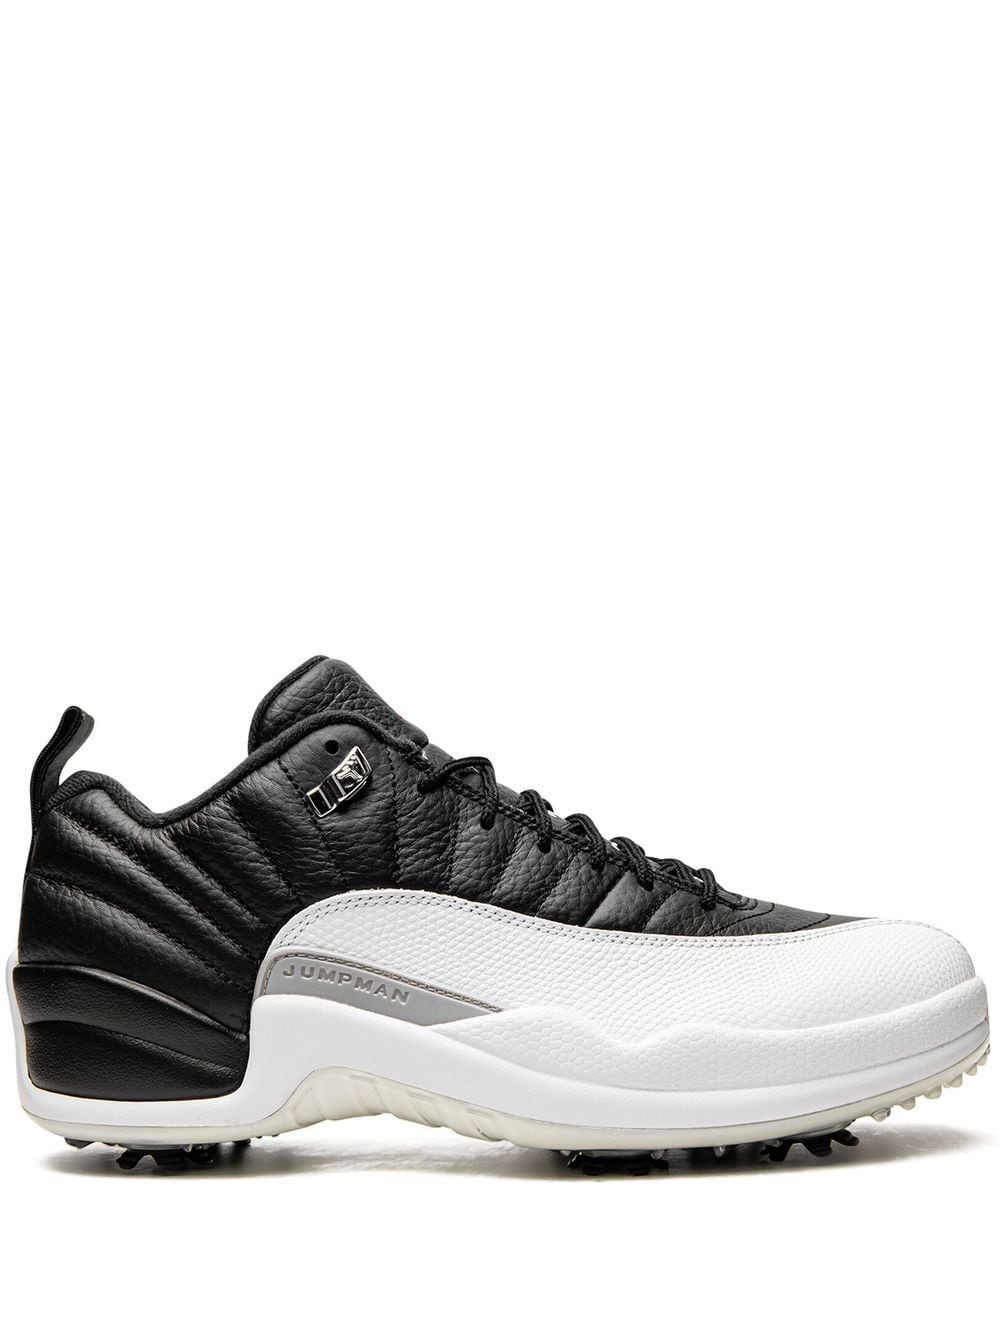 Jordan Air Jordan 12 Low "Playoffs" golf shoes - Black von Jordan